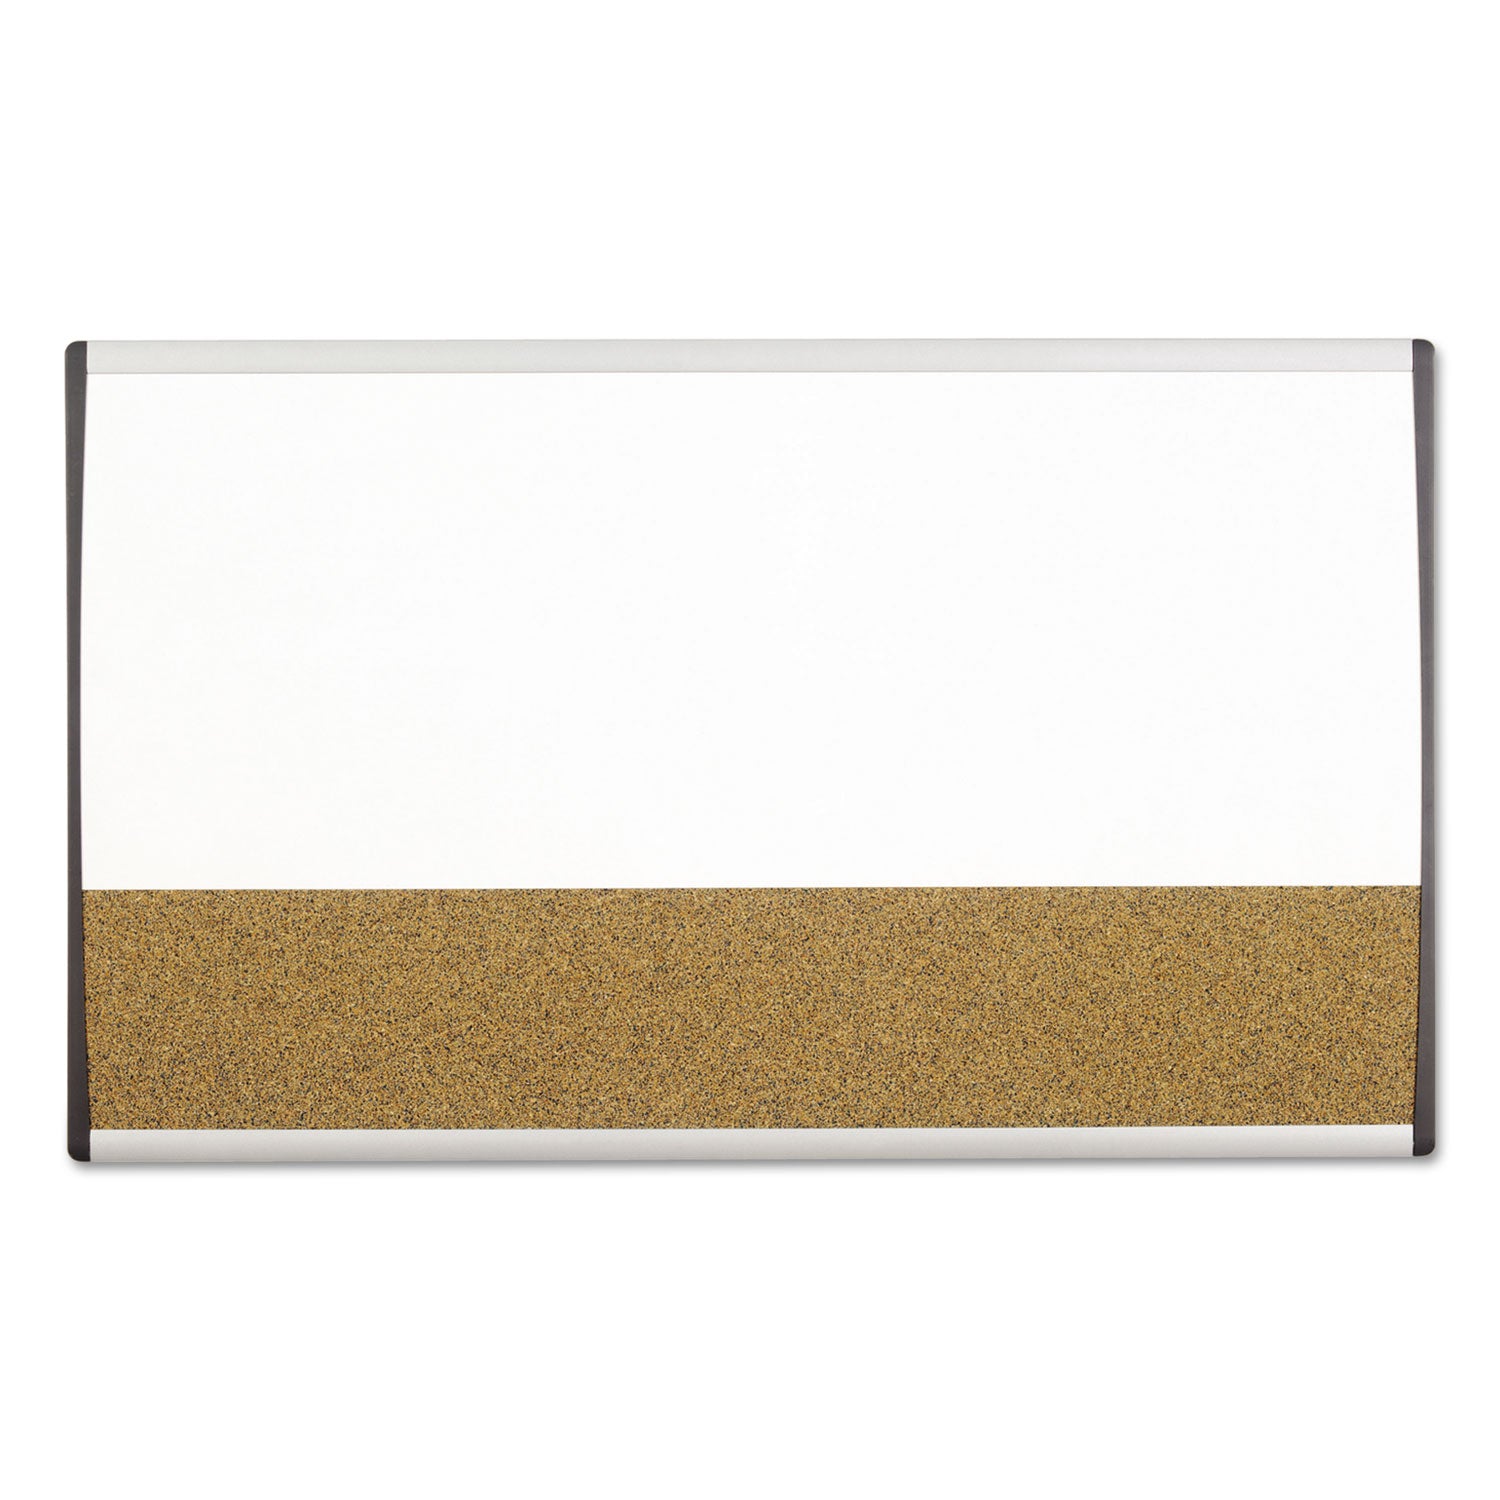 ARC Frame Cubicle Dry Erase/Cork Board, 30 x 18, Tan/White Surface, Silver Aluminum Frame - 